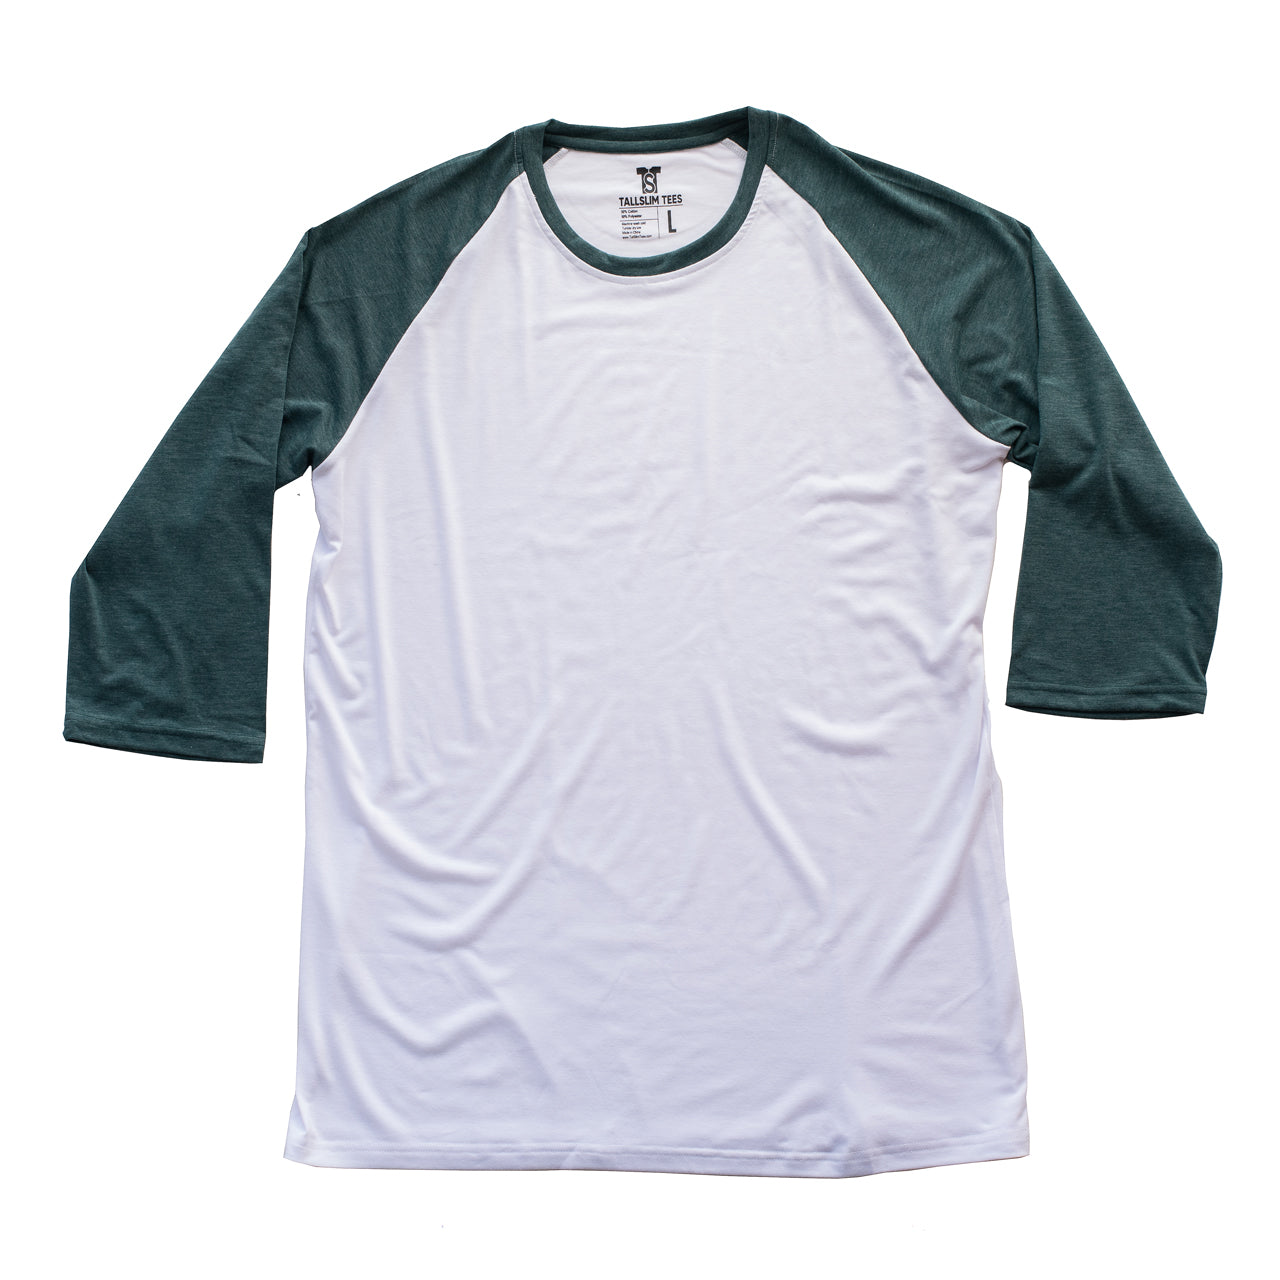 White and Dark Green Raglan 3/4 Sleeve Shirt For Tall Slim Men